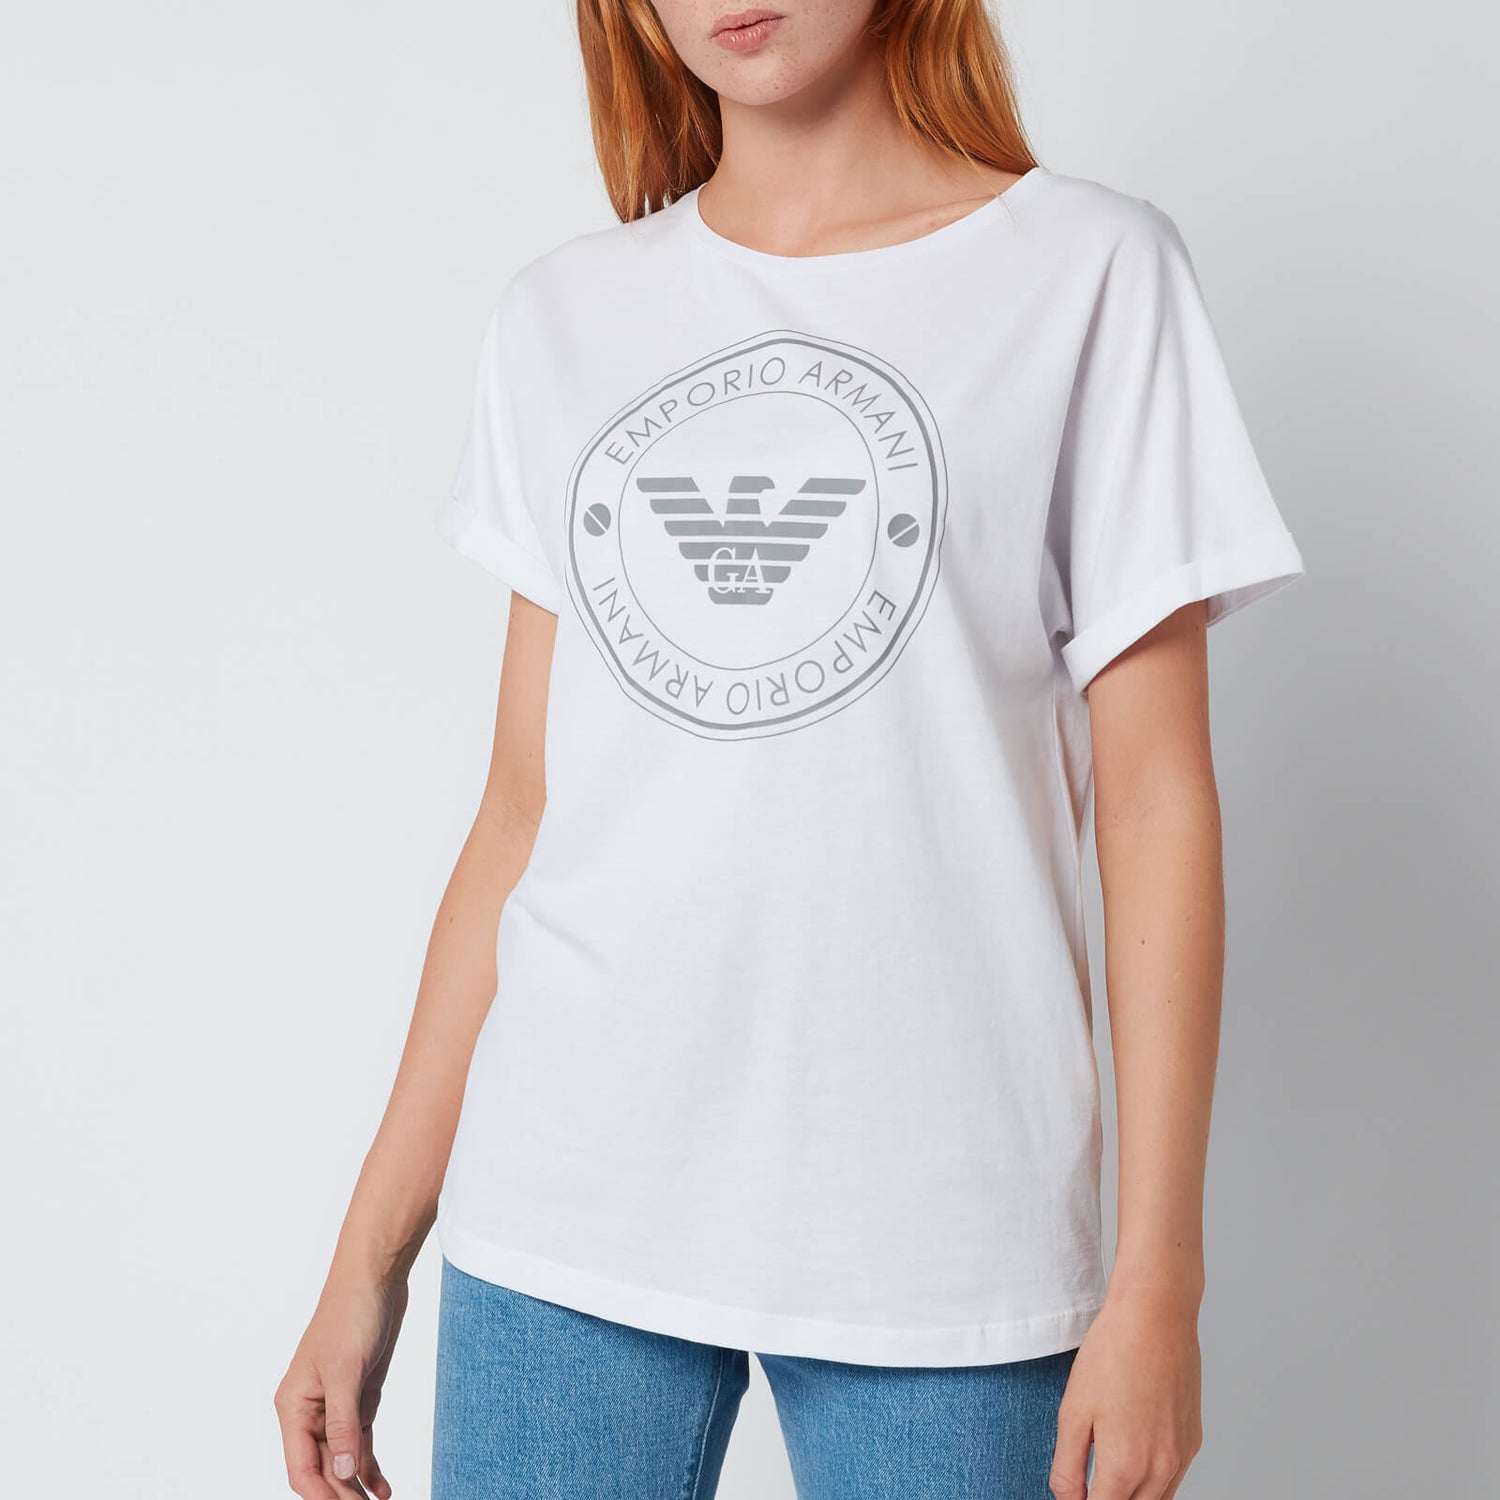 Emporio Armani Loungewear Women's Cotton T-Shirt - White